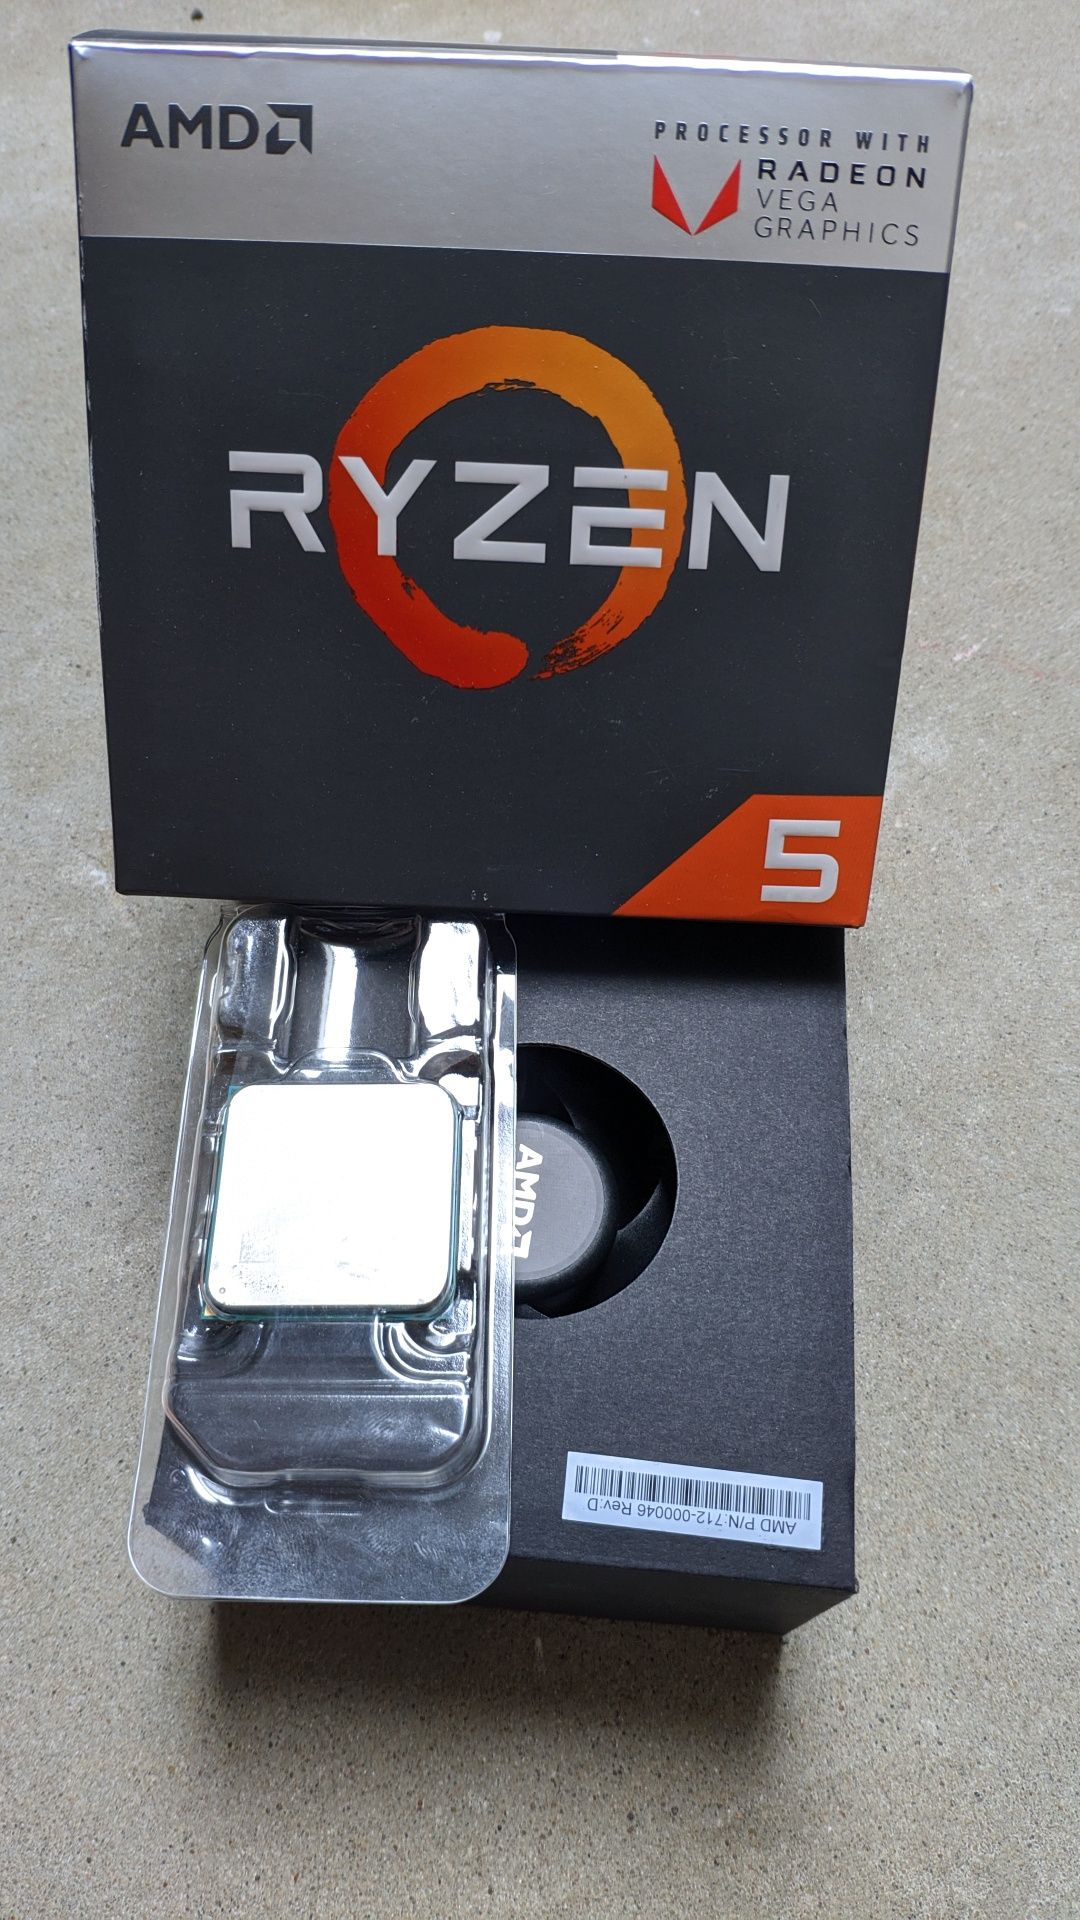 AMD Ryzen 5 2400g procesor AM4 / grafika Vega 7 / chlodzenie BOX